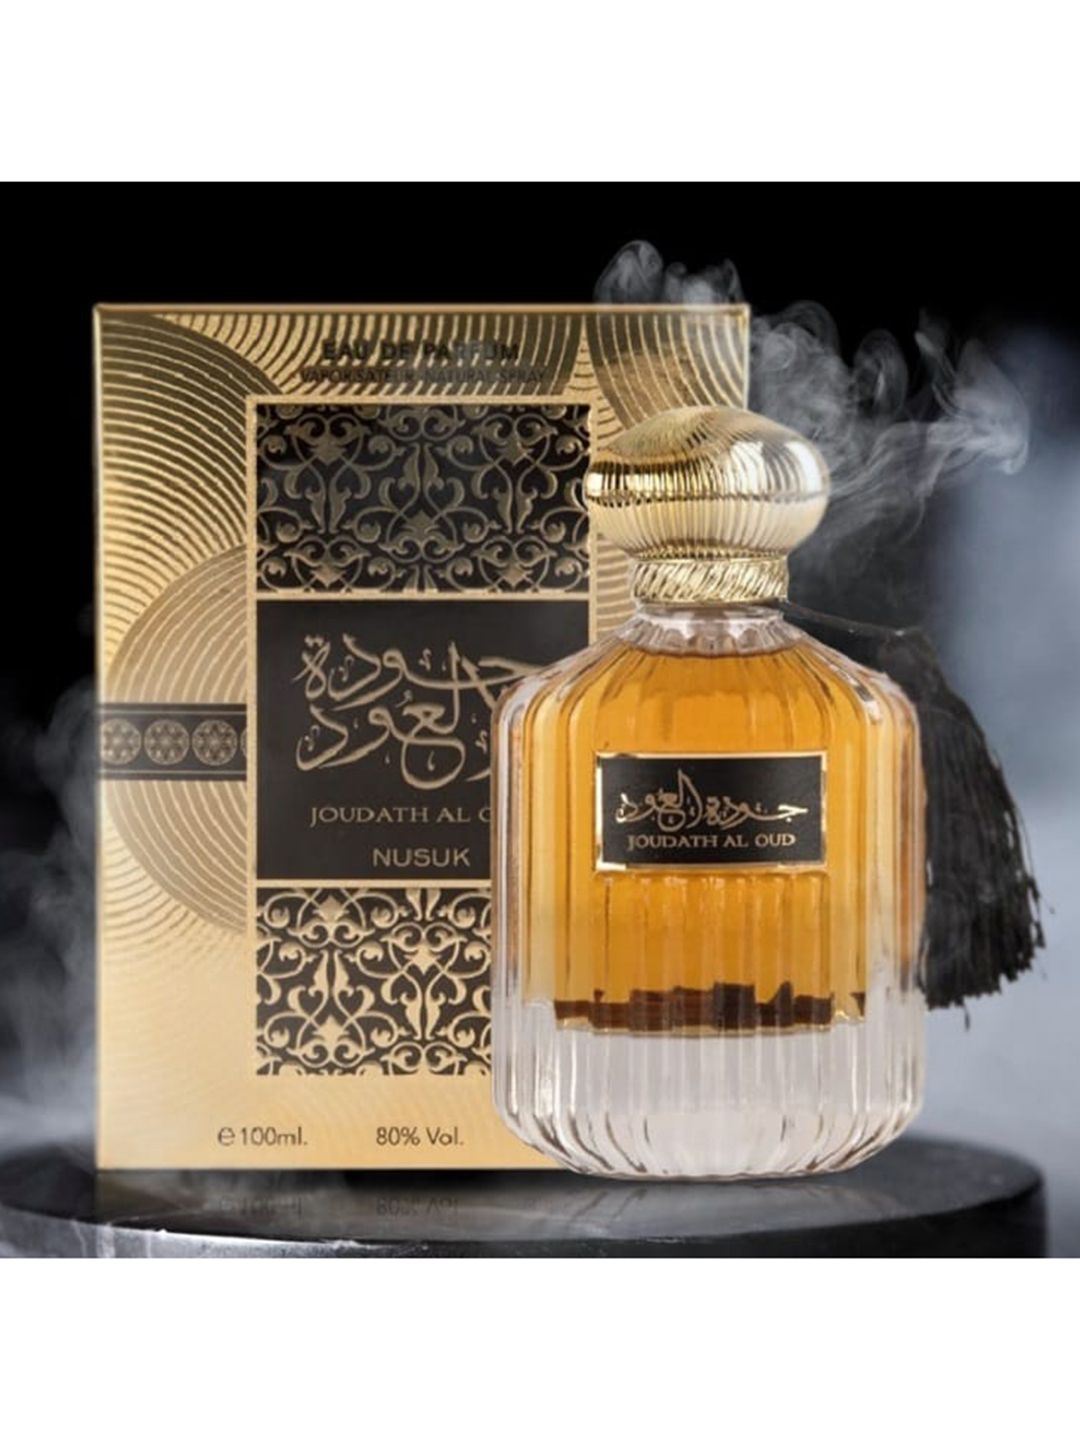 NUSUK Joudath Al Eau De Parfum Oud 100 Ml Price in India